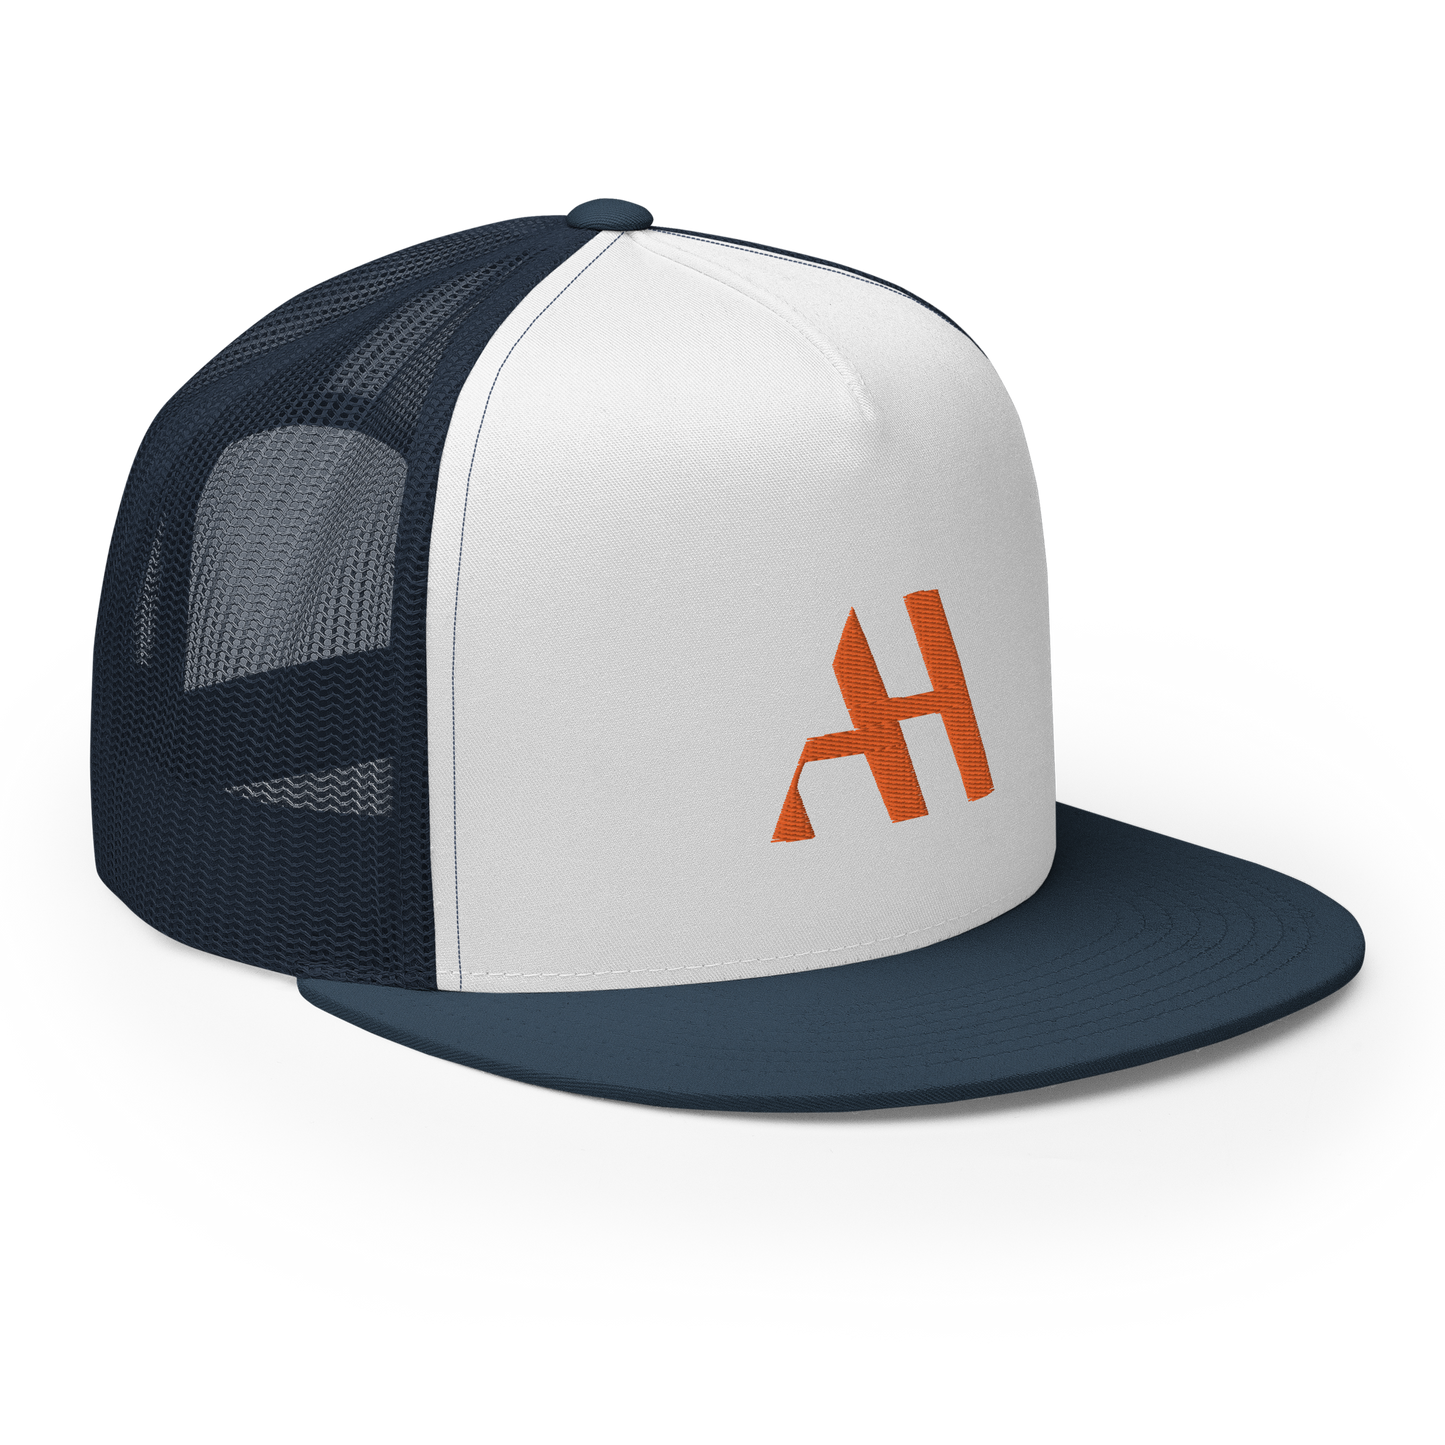 ANTWON HAYDEN TRUCKER CAP